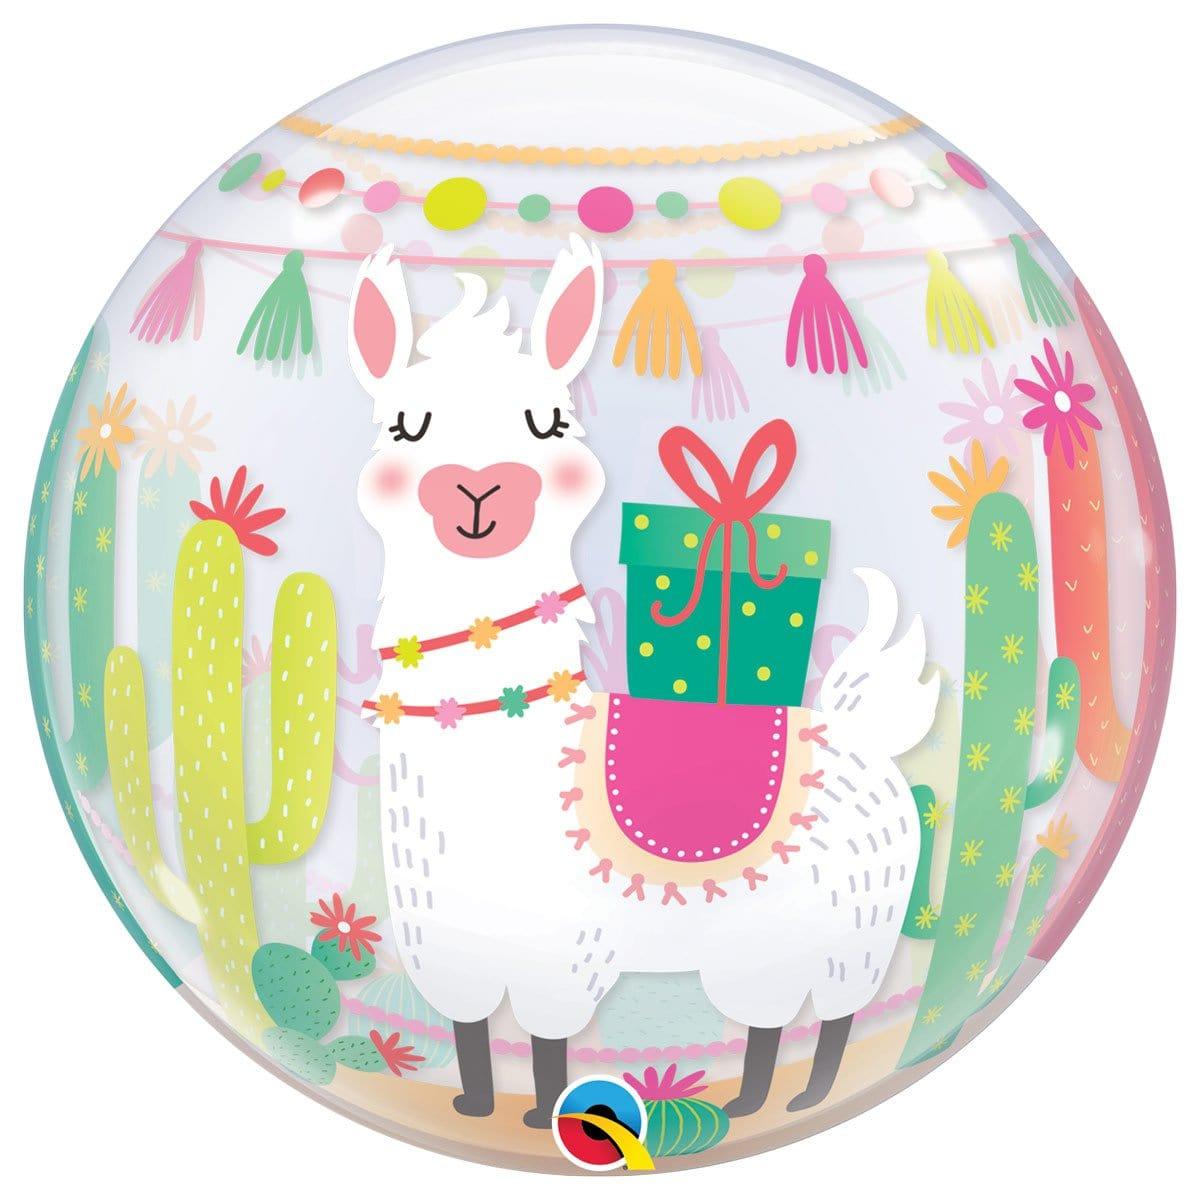 Buy Balloons Llama Birthday Party Bubble Balloon sold at Party Expert